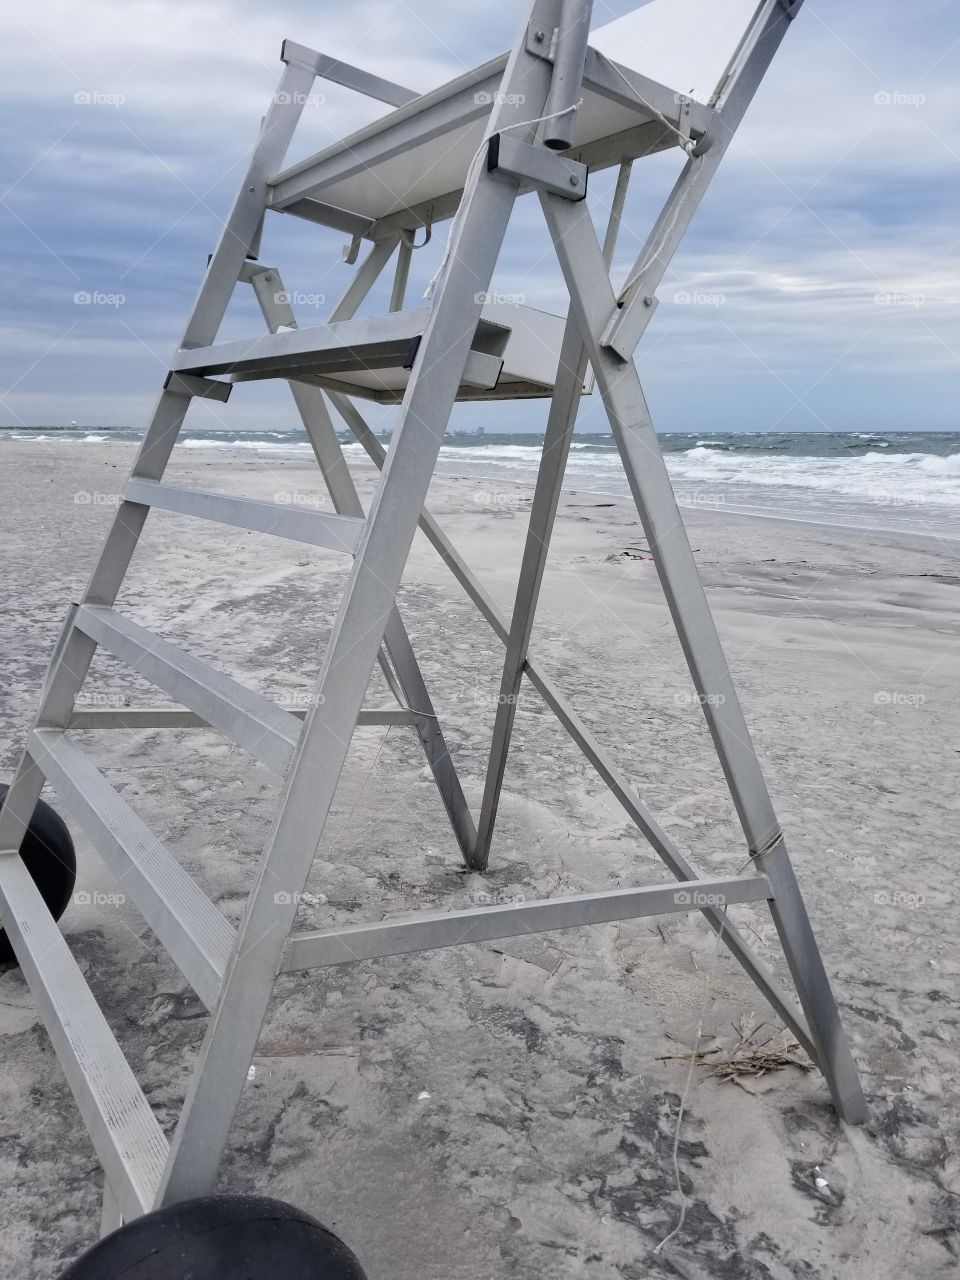 life guard perch on beach